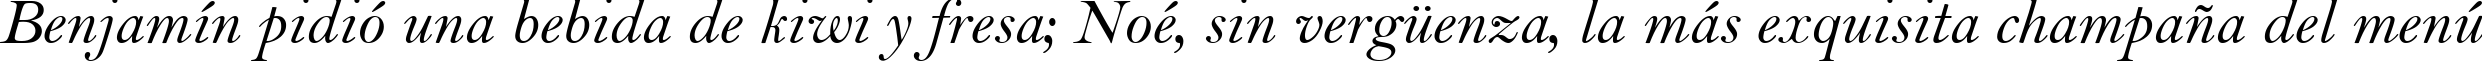 Пример написания шрифтом Bell MT Italic текста на испанском